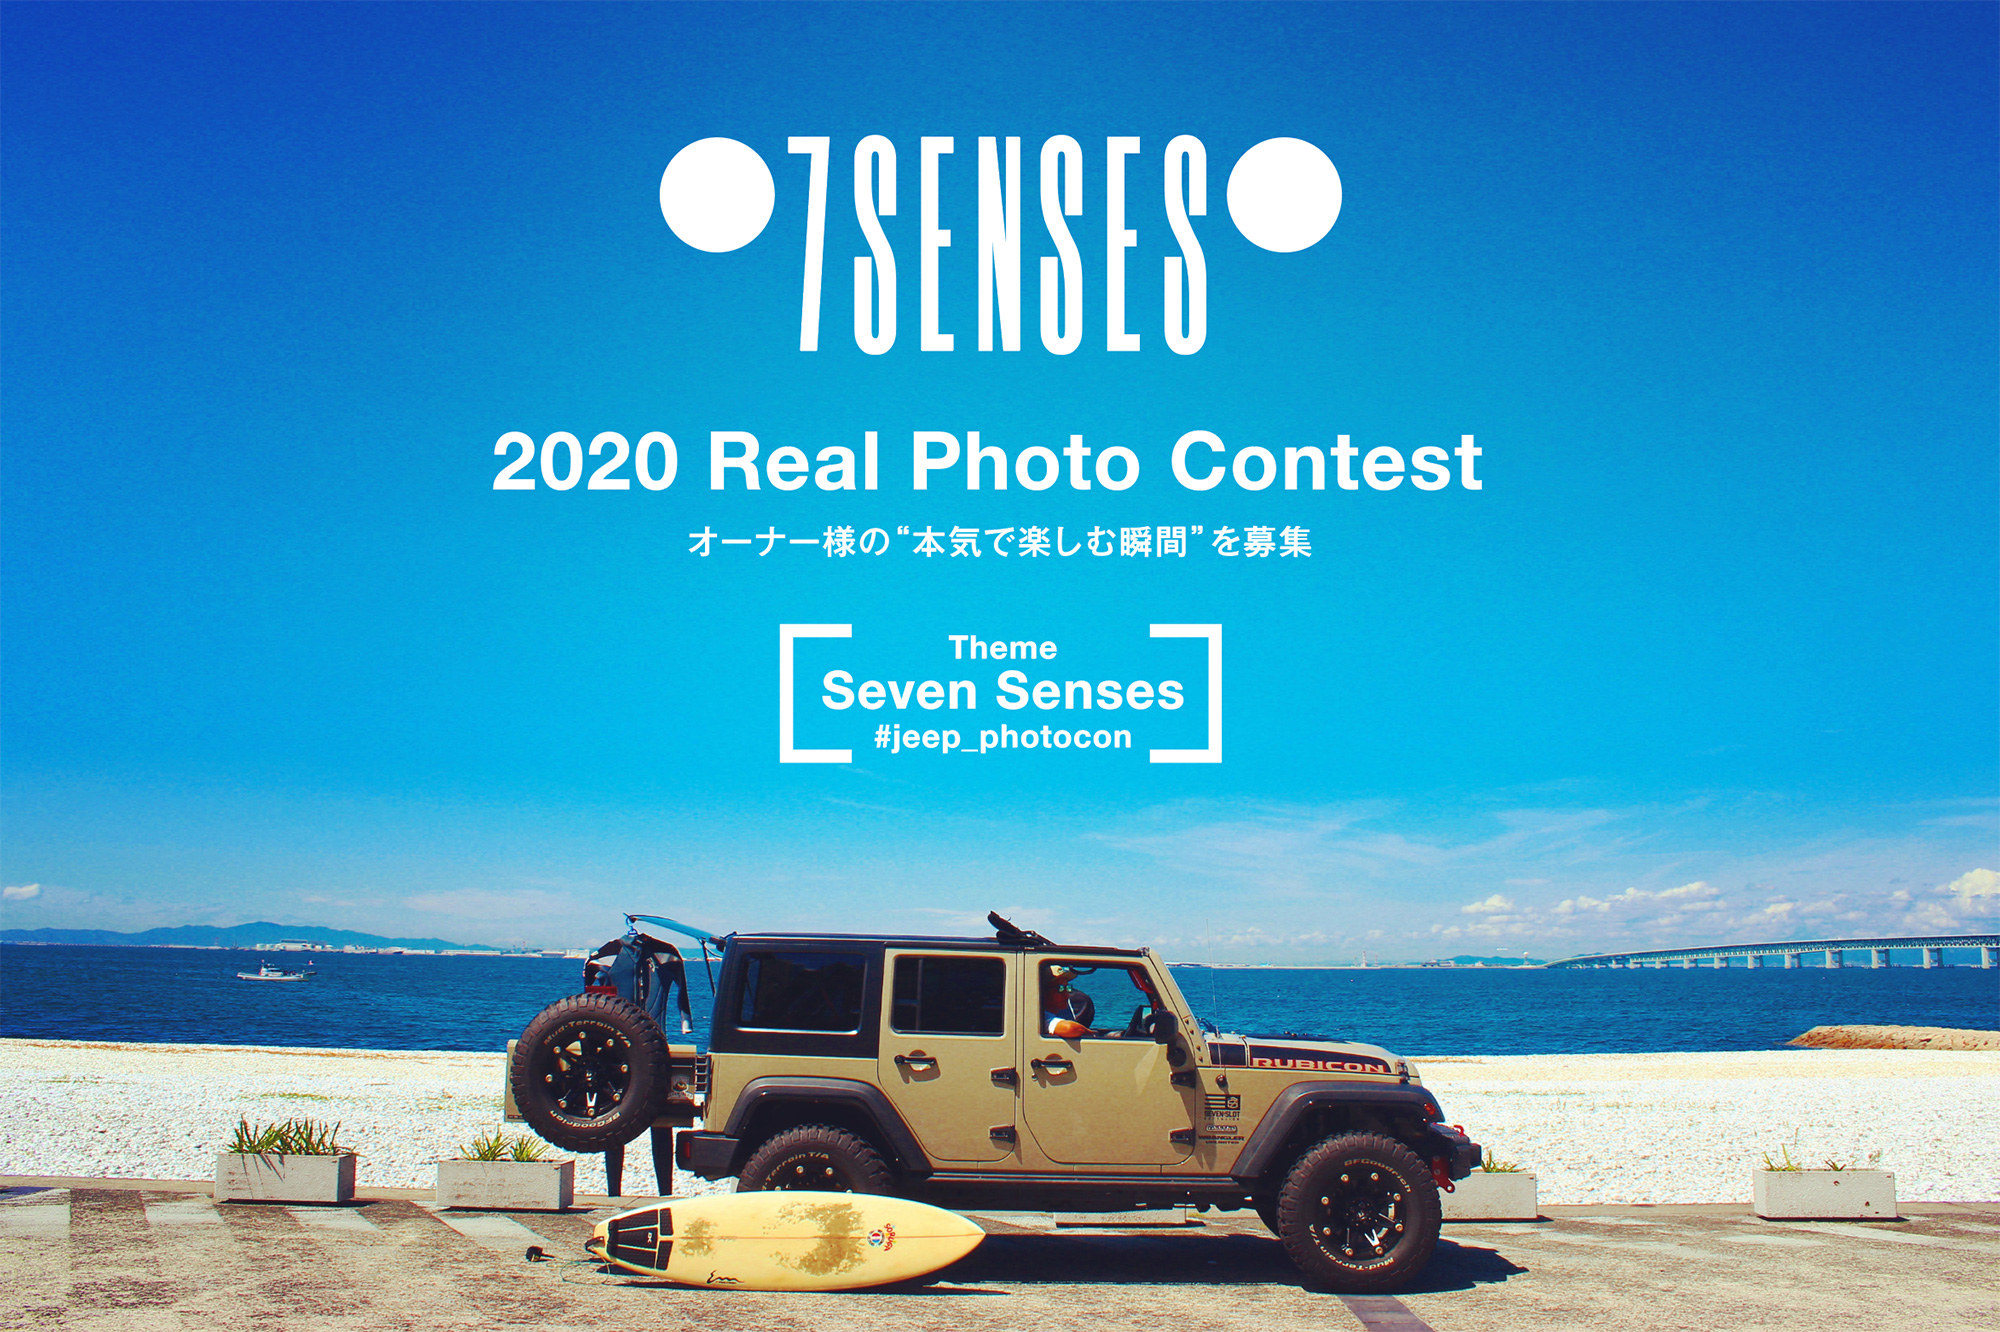 7SENSES 2020 Real Photo Contest